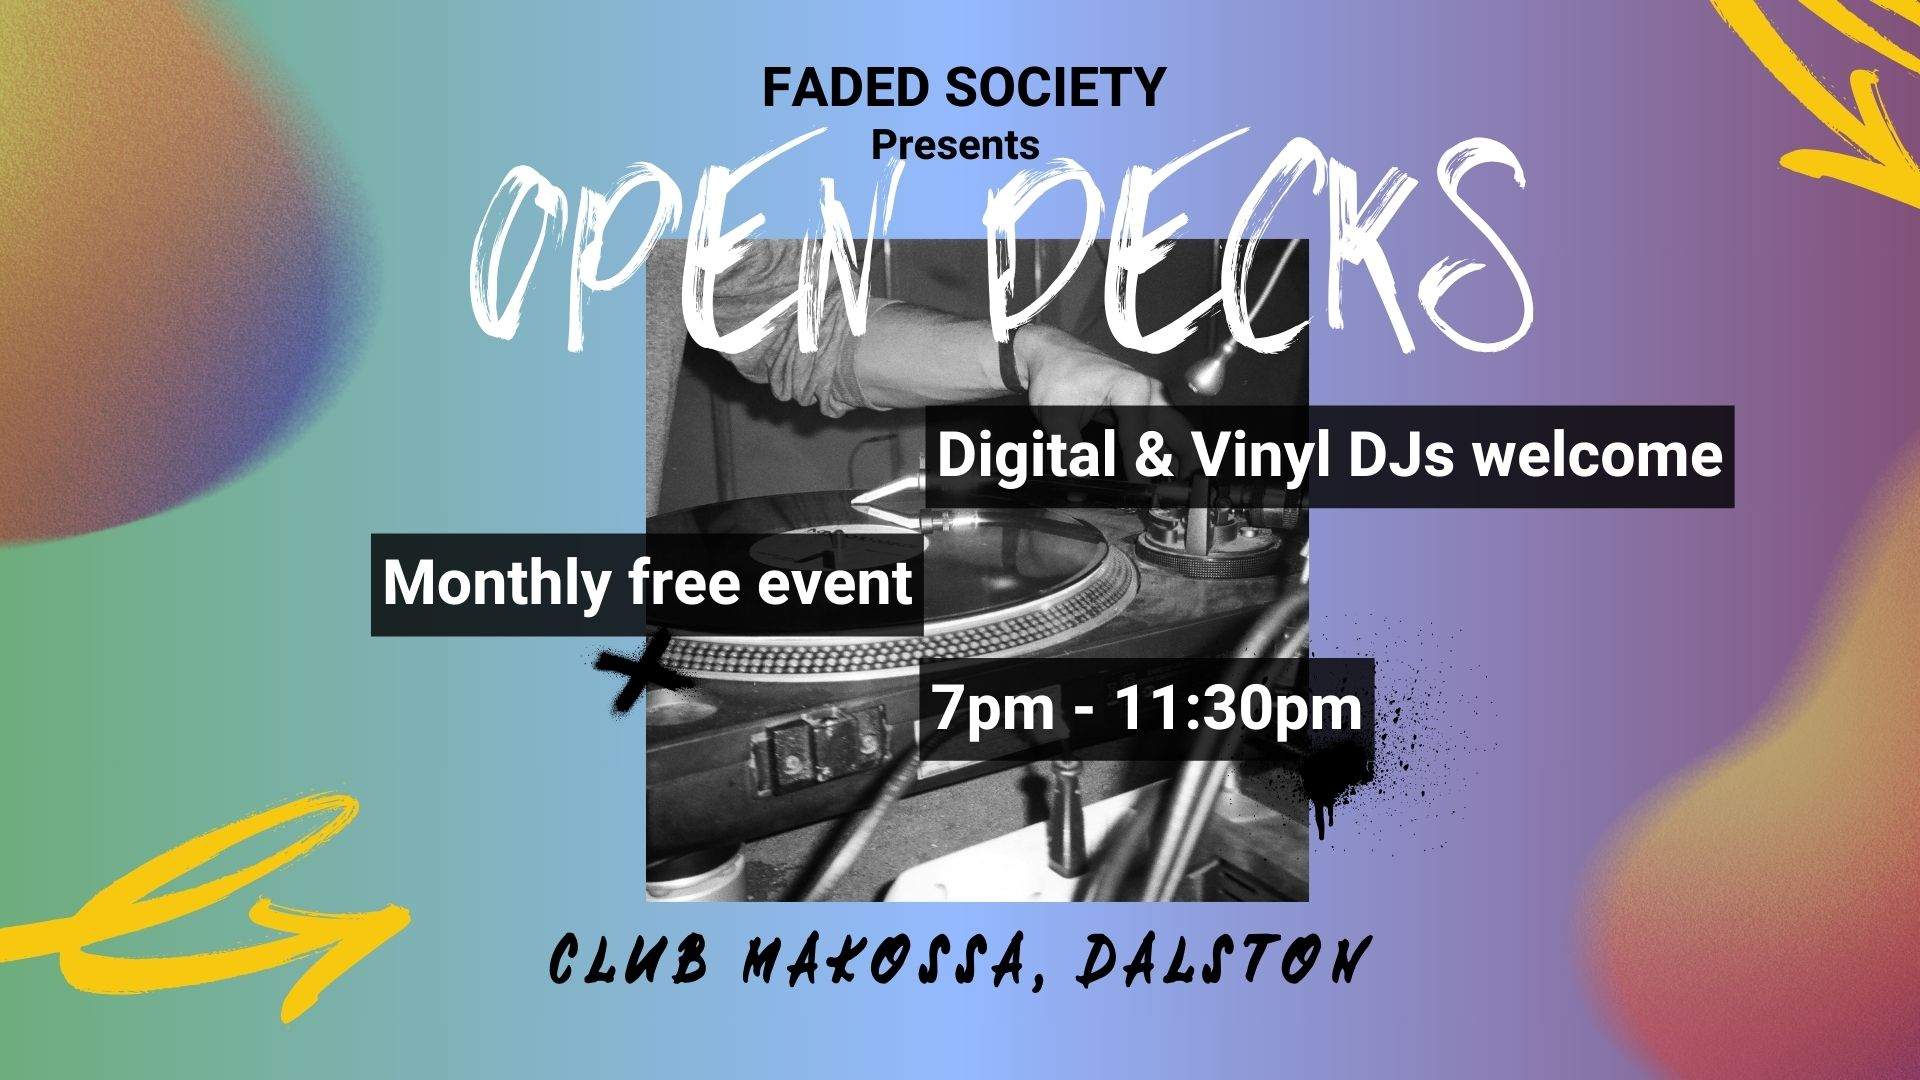 FREE DJ Open Decks at Makossa, Dalston - フライヤー表